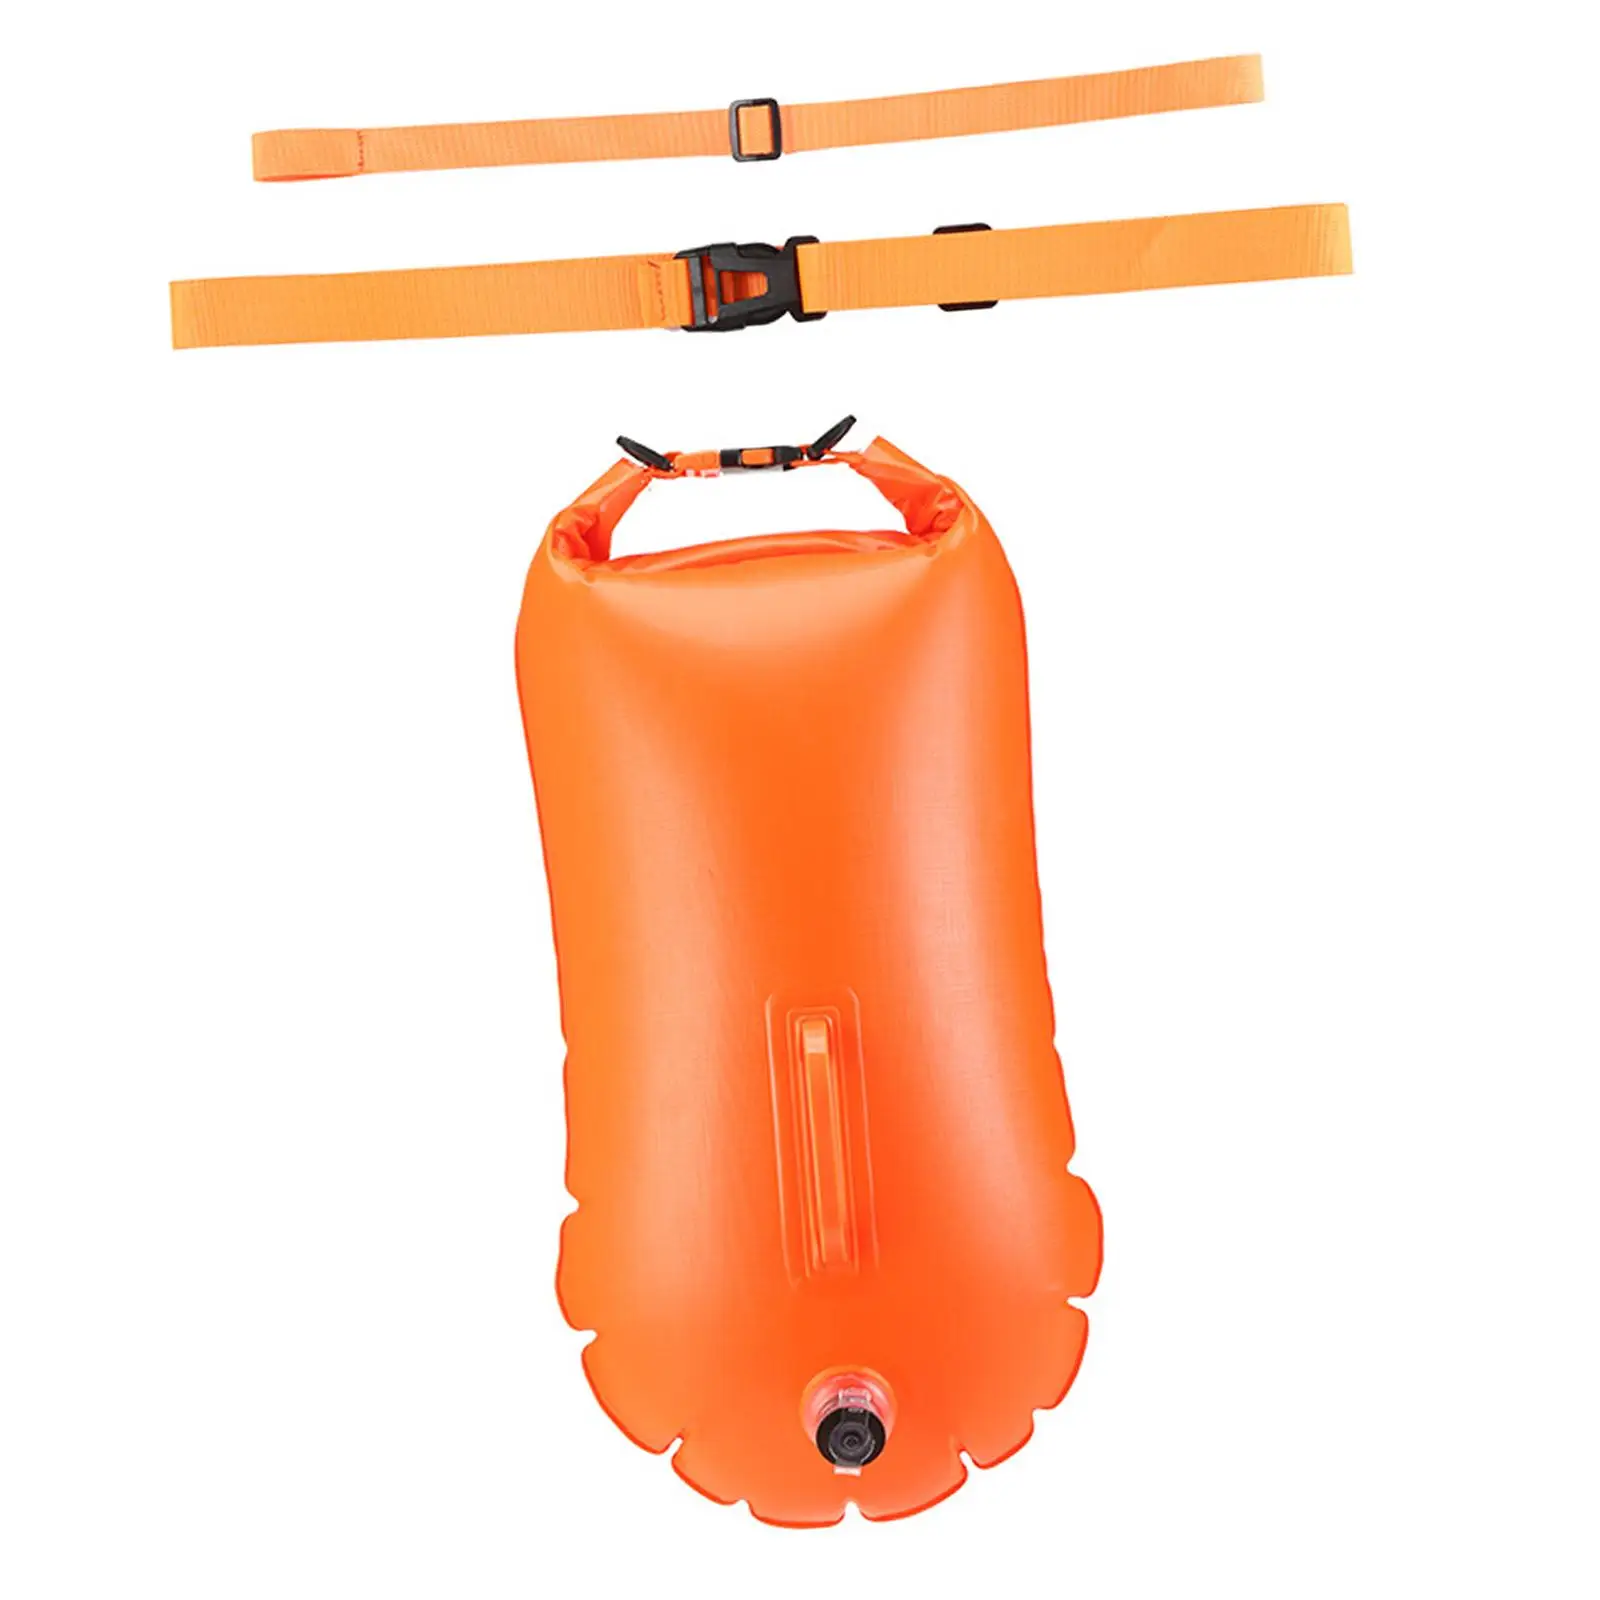 Inflatable Swim Buoy Waterproof Bag High Visible Ultralight Floating Bag for Diving Lake Boating Kayaking Swimming Pool